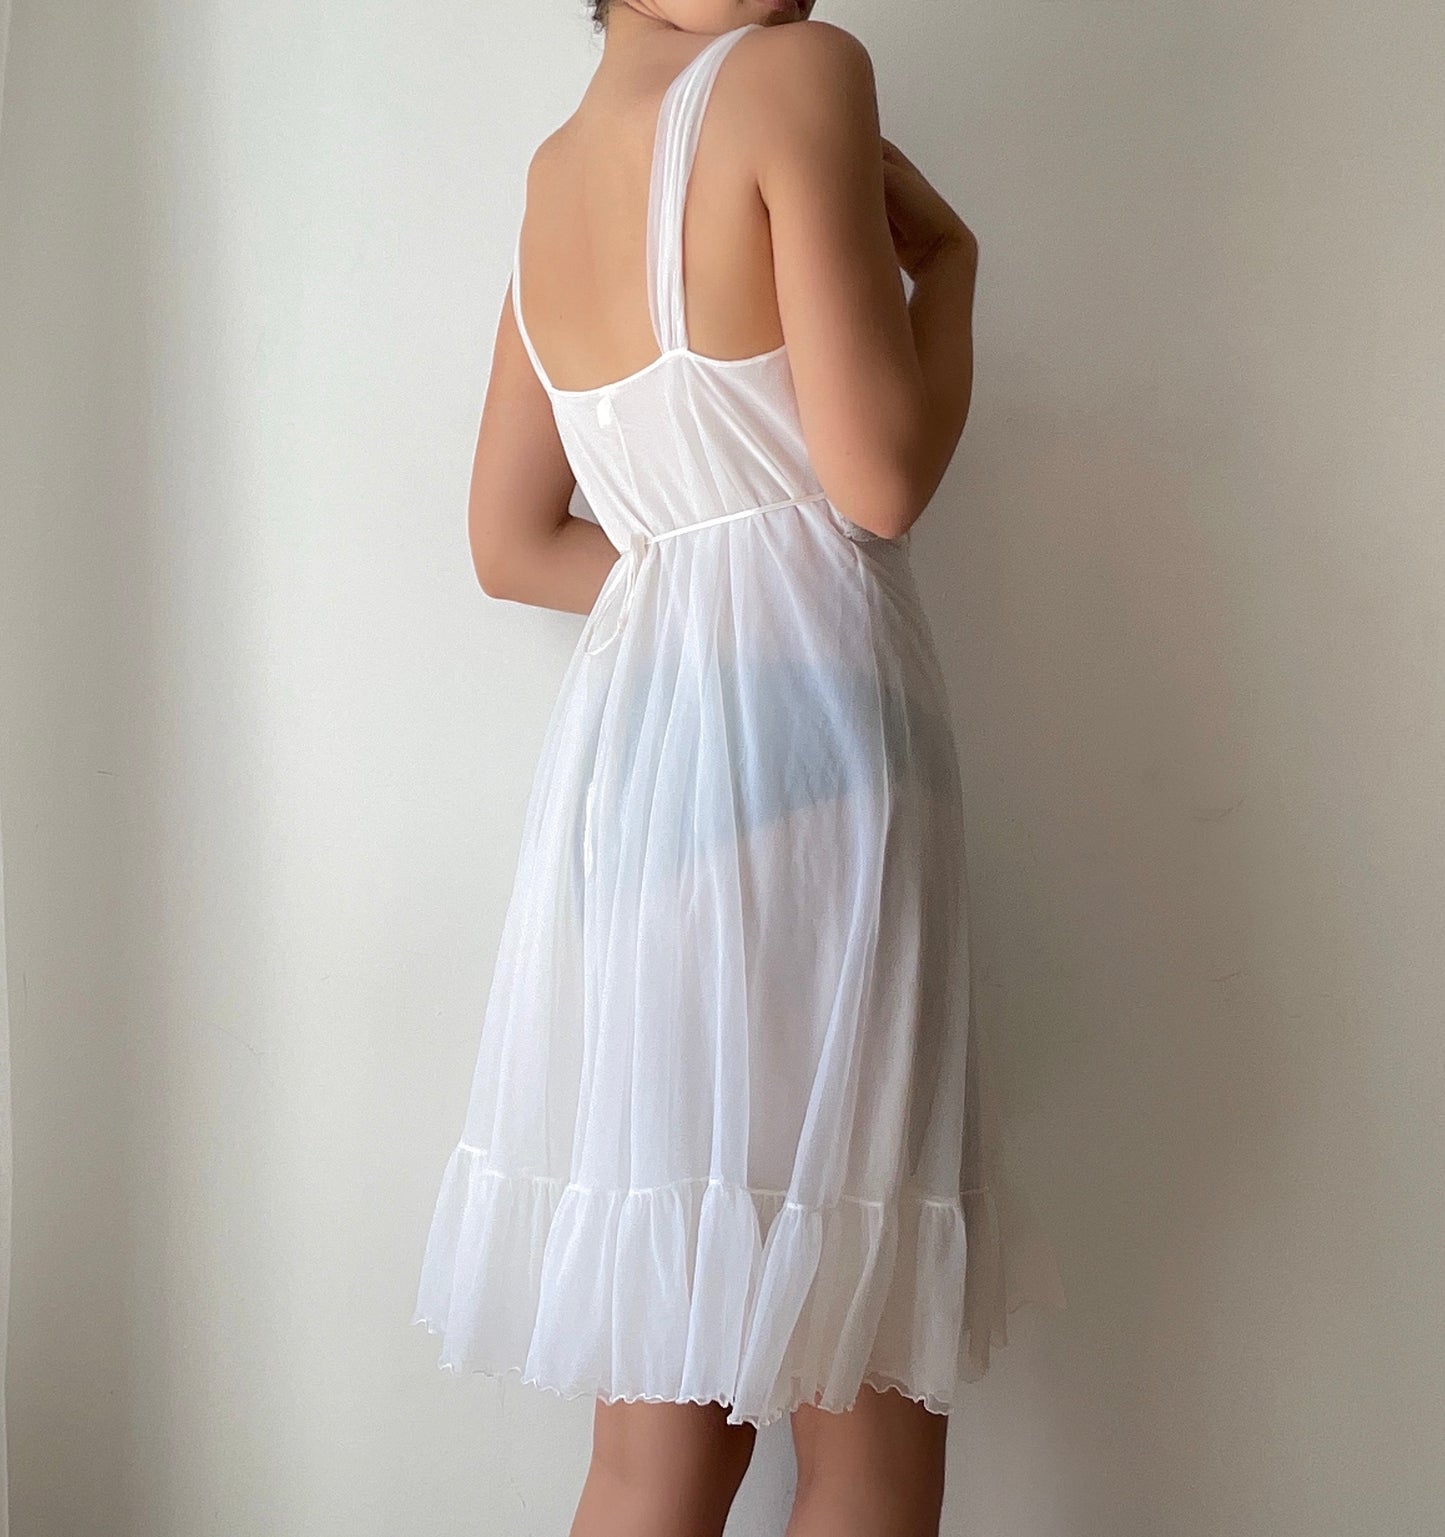 Angelic Lace Dress (S/M)